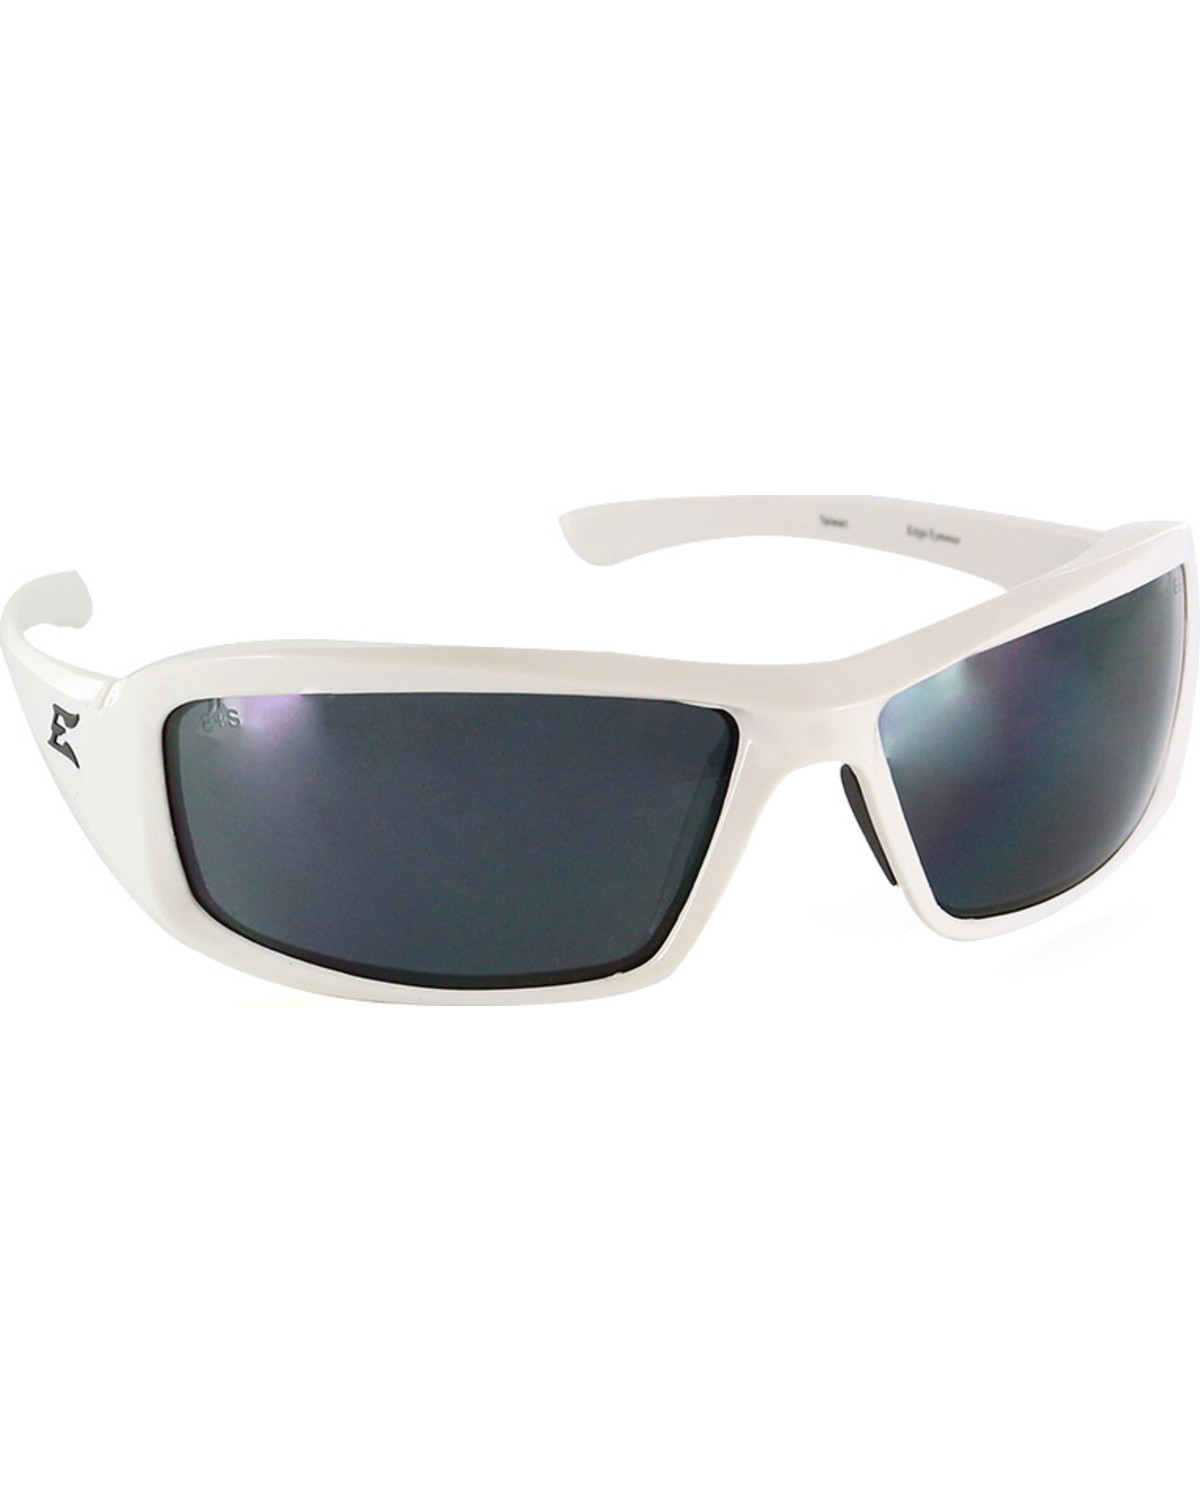 Edge Eyewear Men's Brazeau Safety Sunglasses